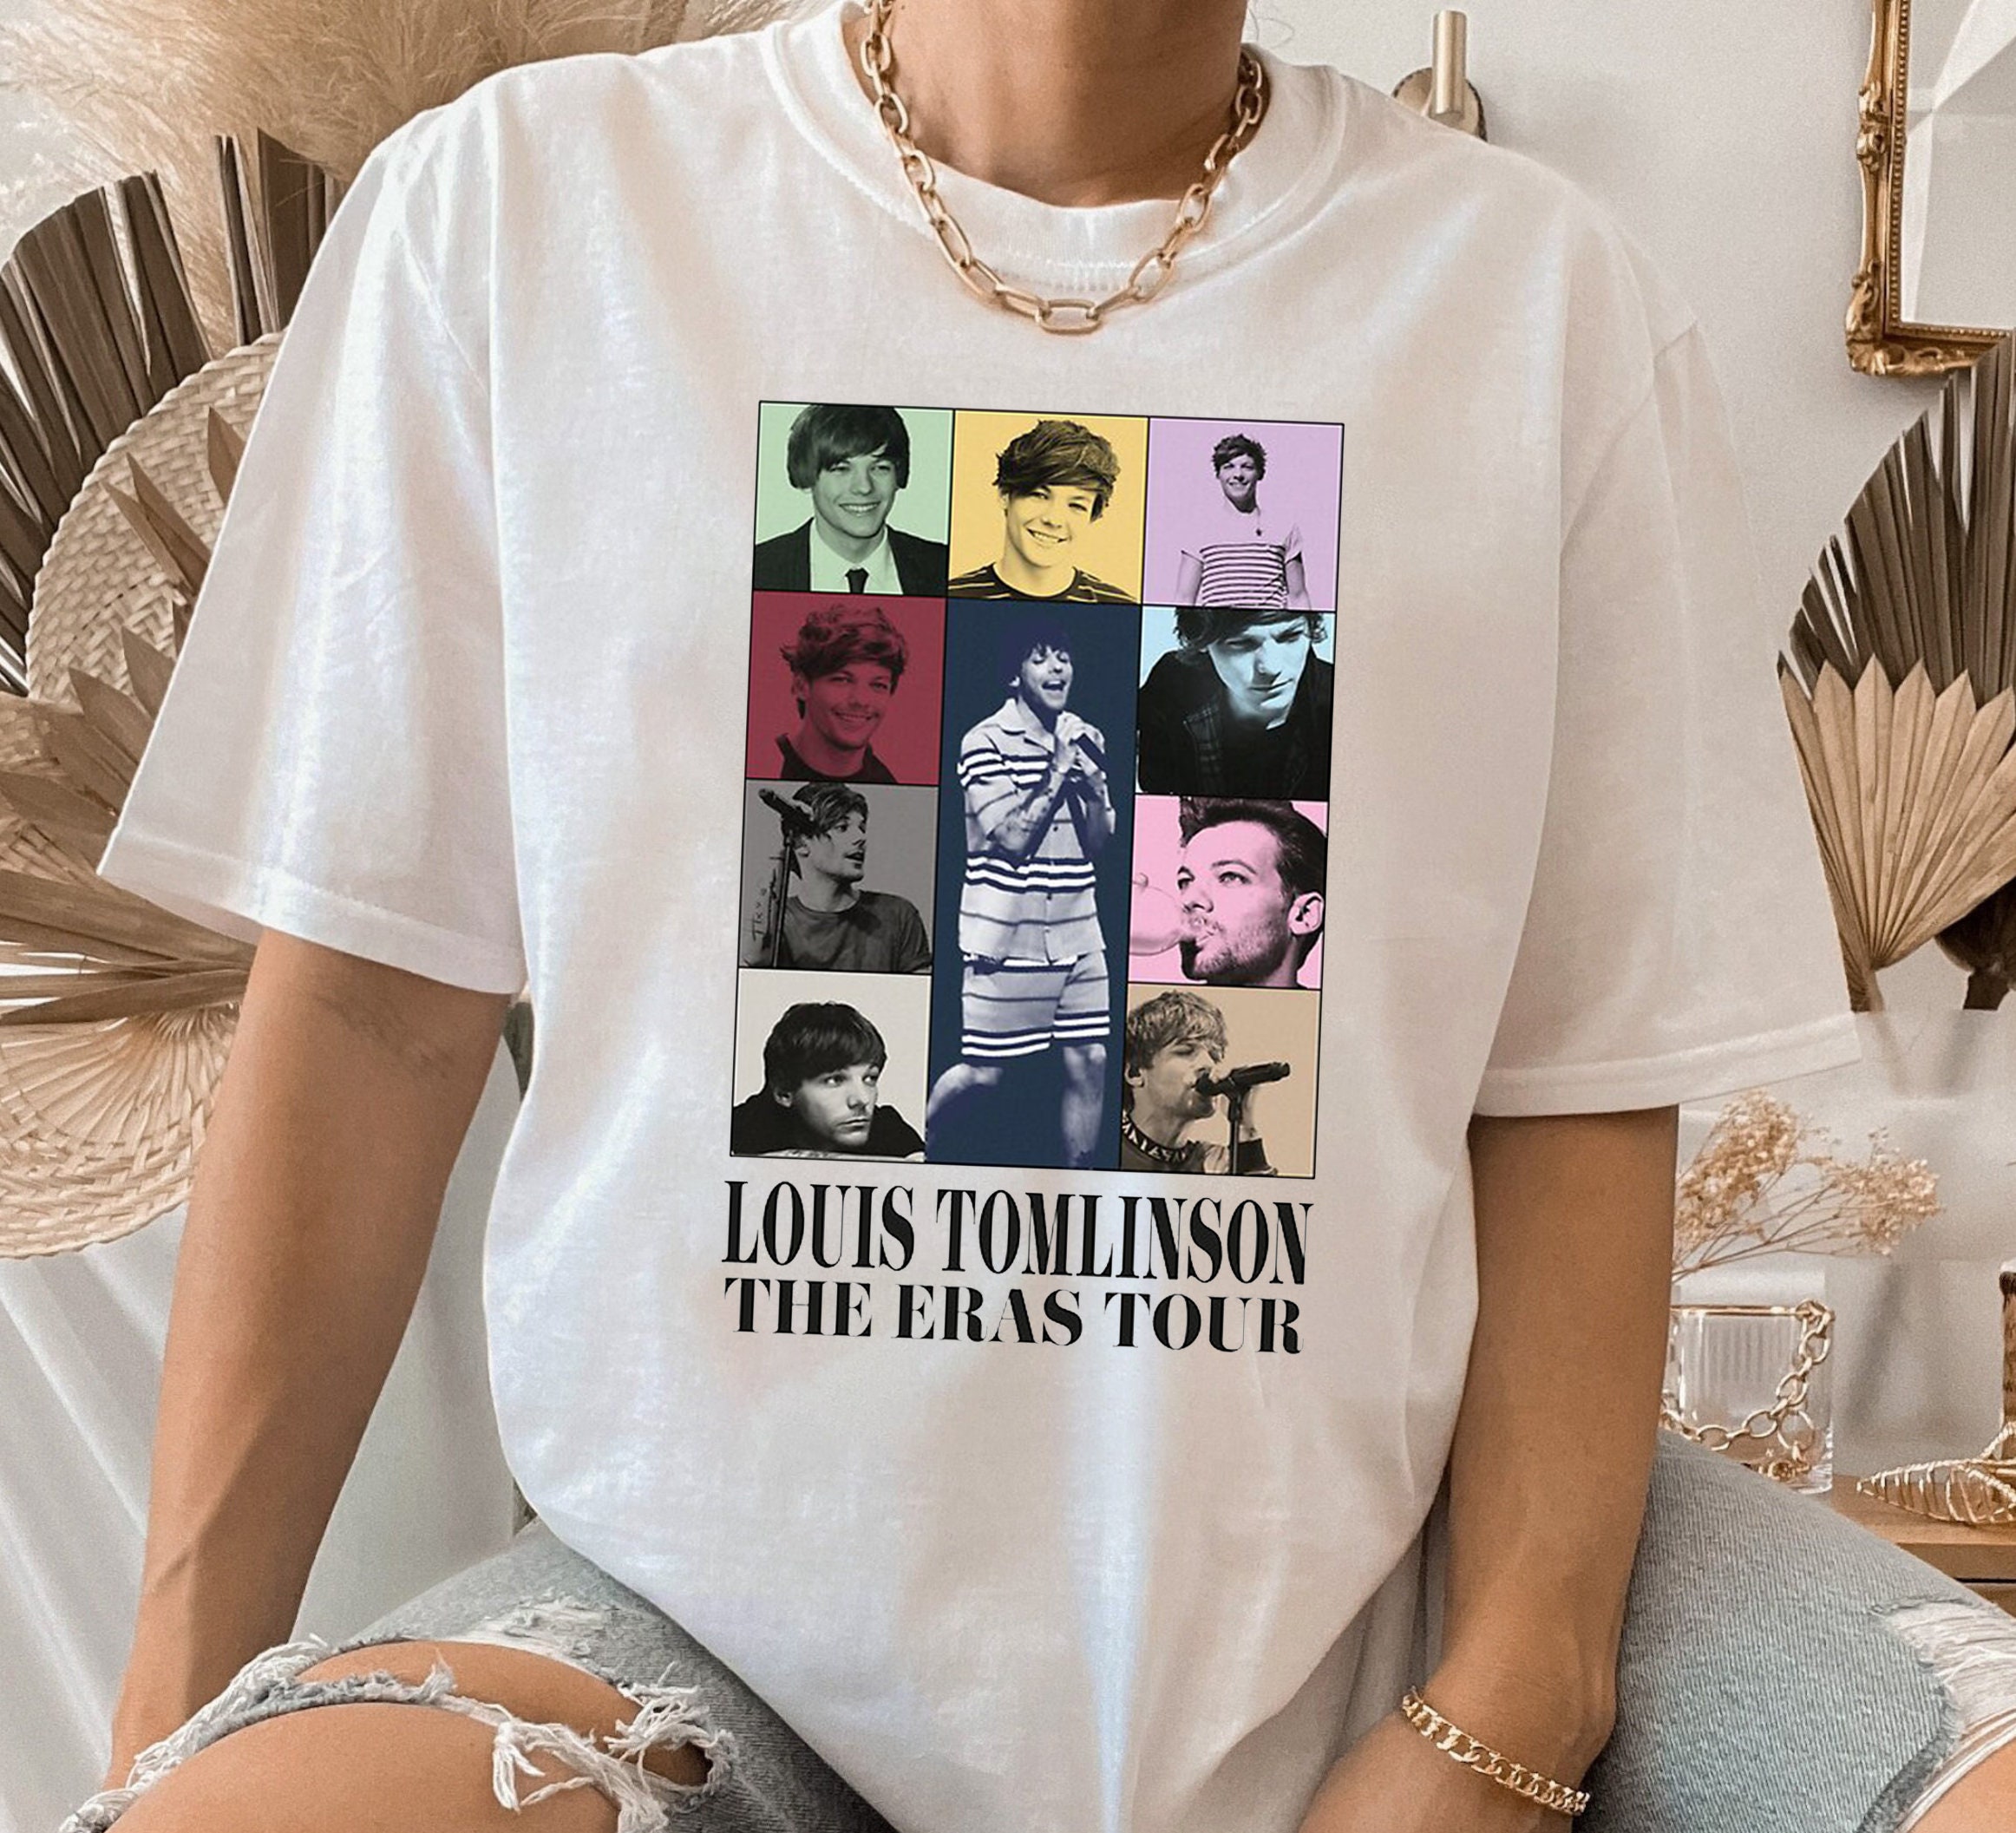 Louis Tomlinson Store - Official Louis Tomlinson Merchandise